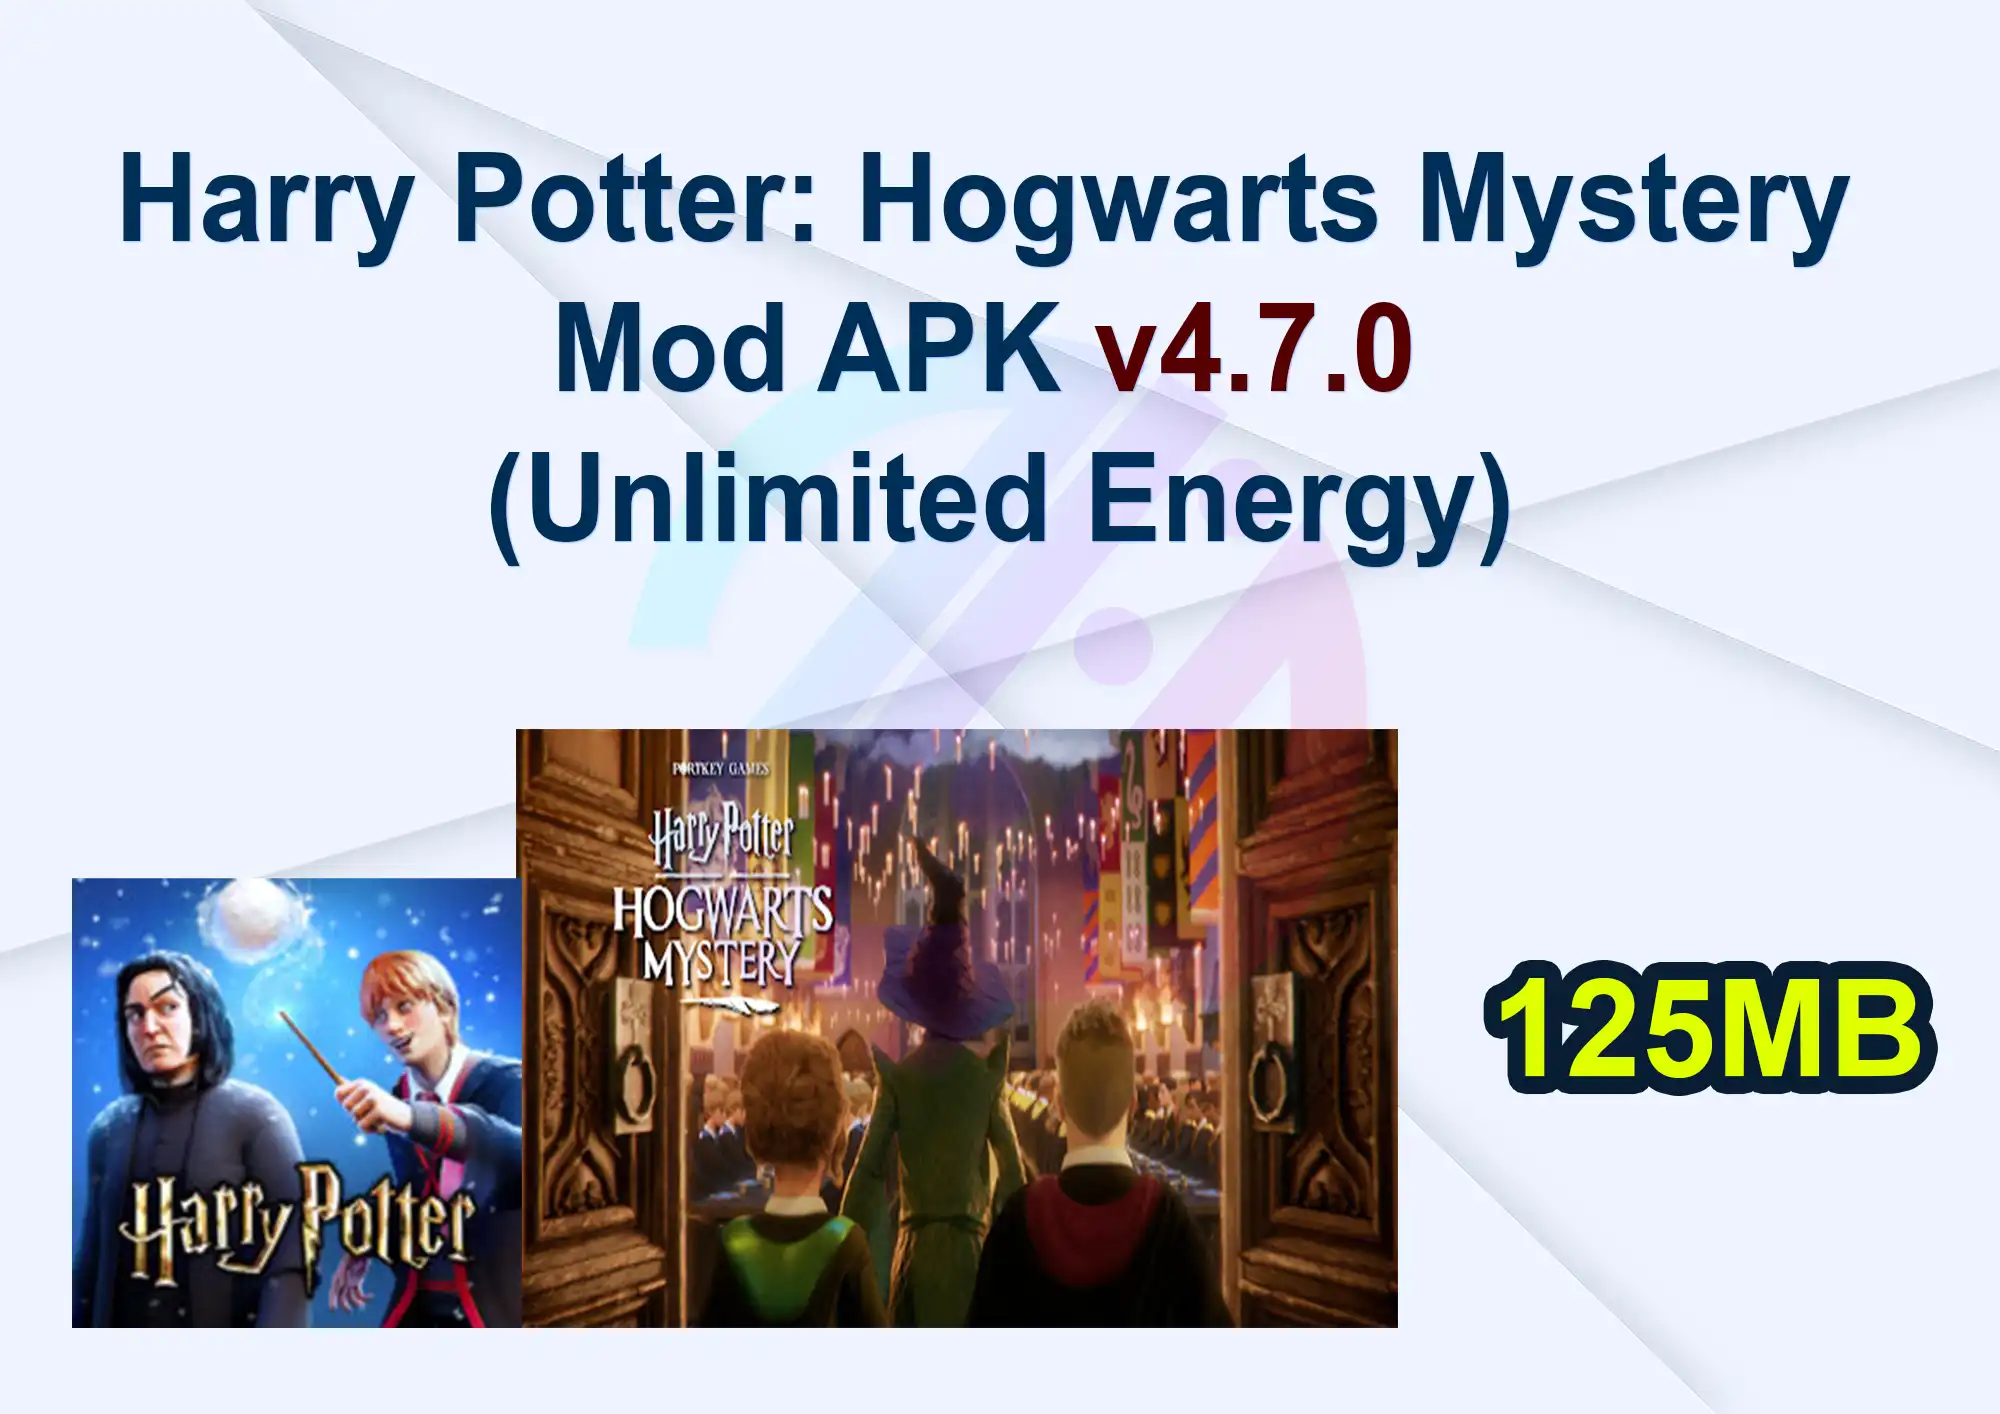 Harry Potter: Hogwarts Mystery Mod APK v4.7.0 (Unlimited Energy)